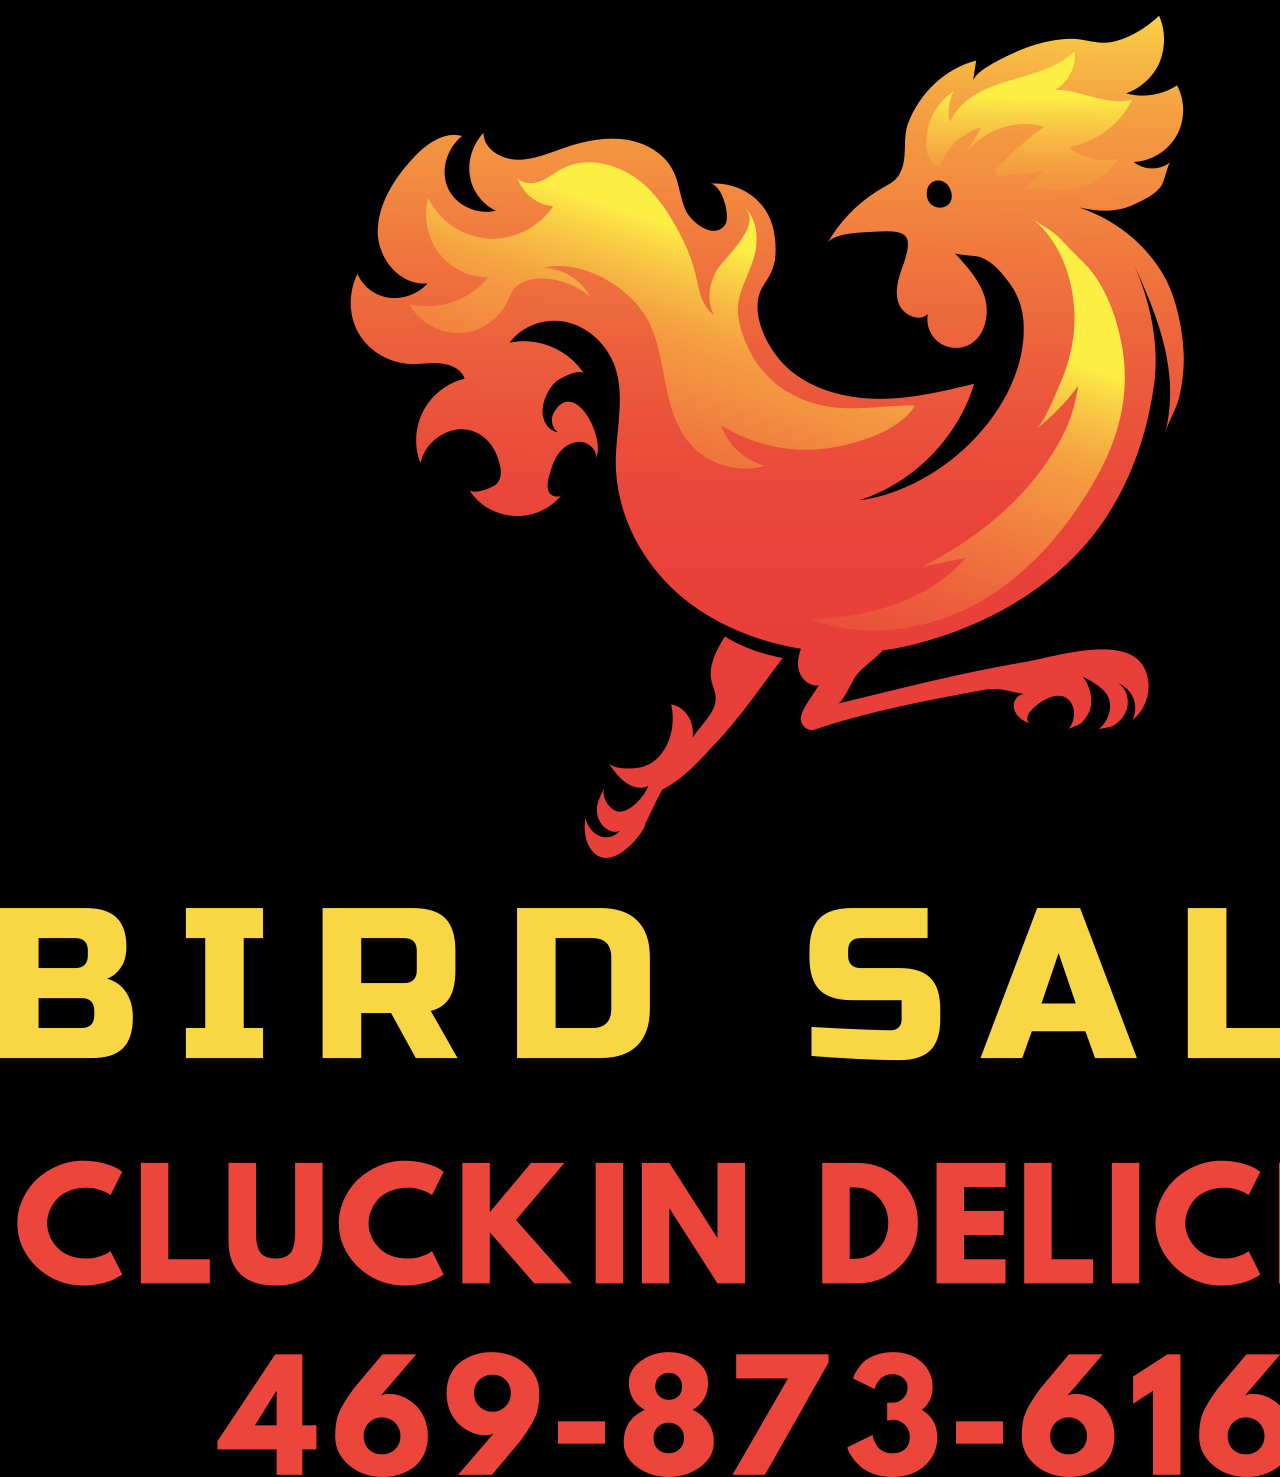 Bird salad 's logo